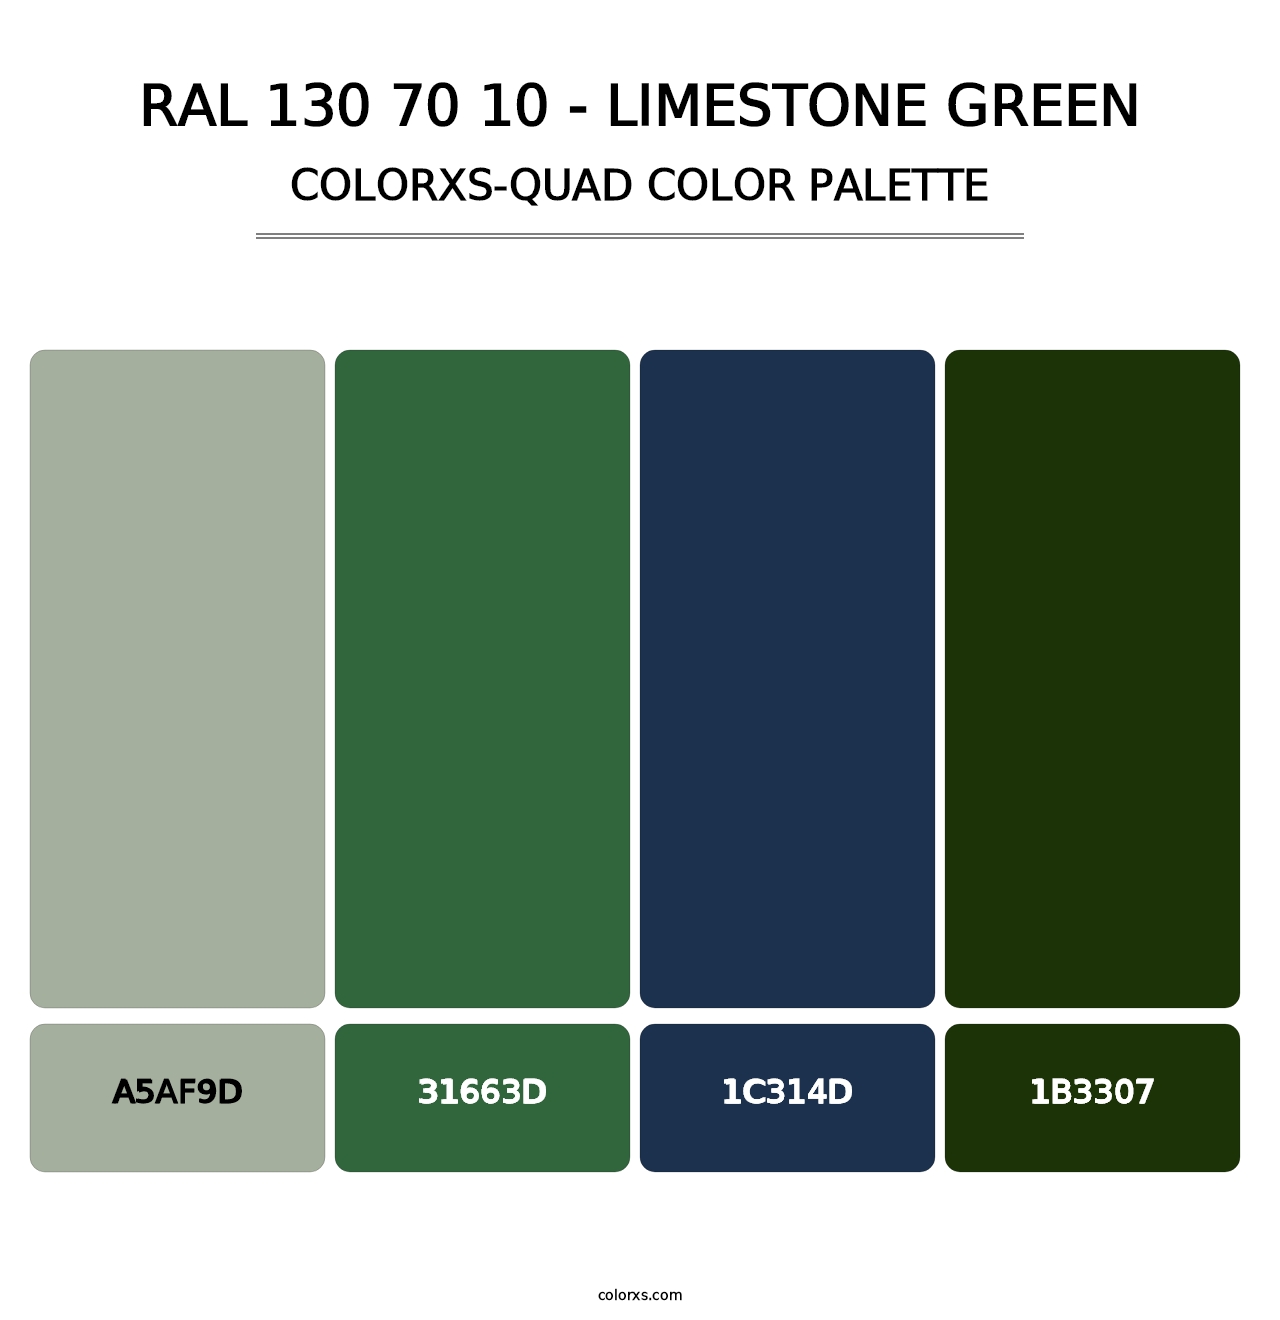 RAL 130 70 10 - Limestone Green - Colorxs Quad Palette